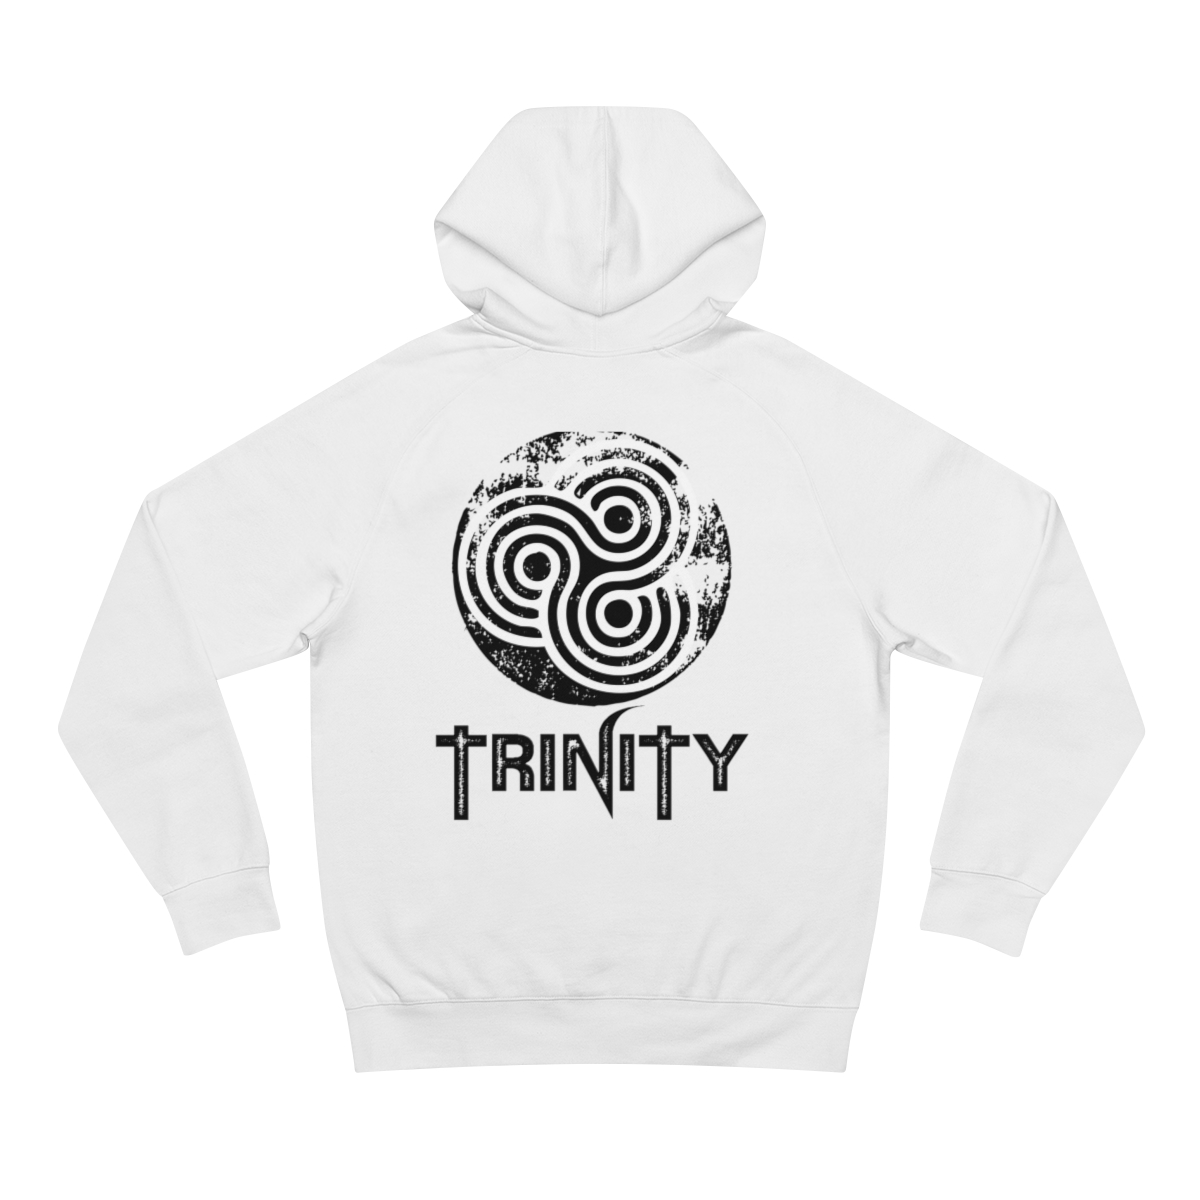 Trinity Unisex Supply Hoodie product thumbnail image